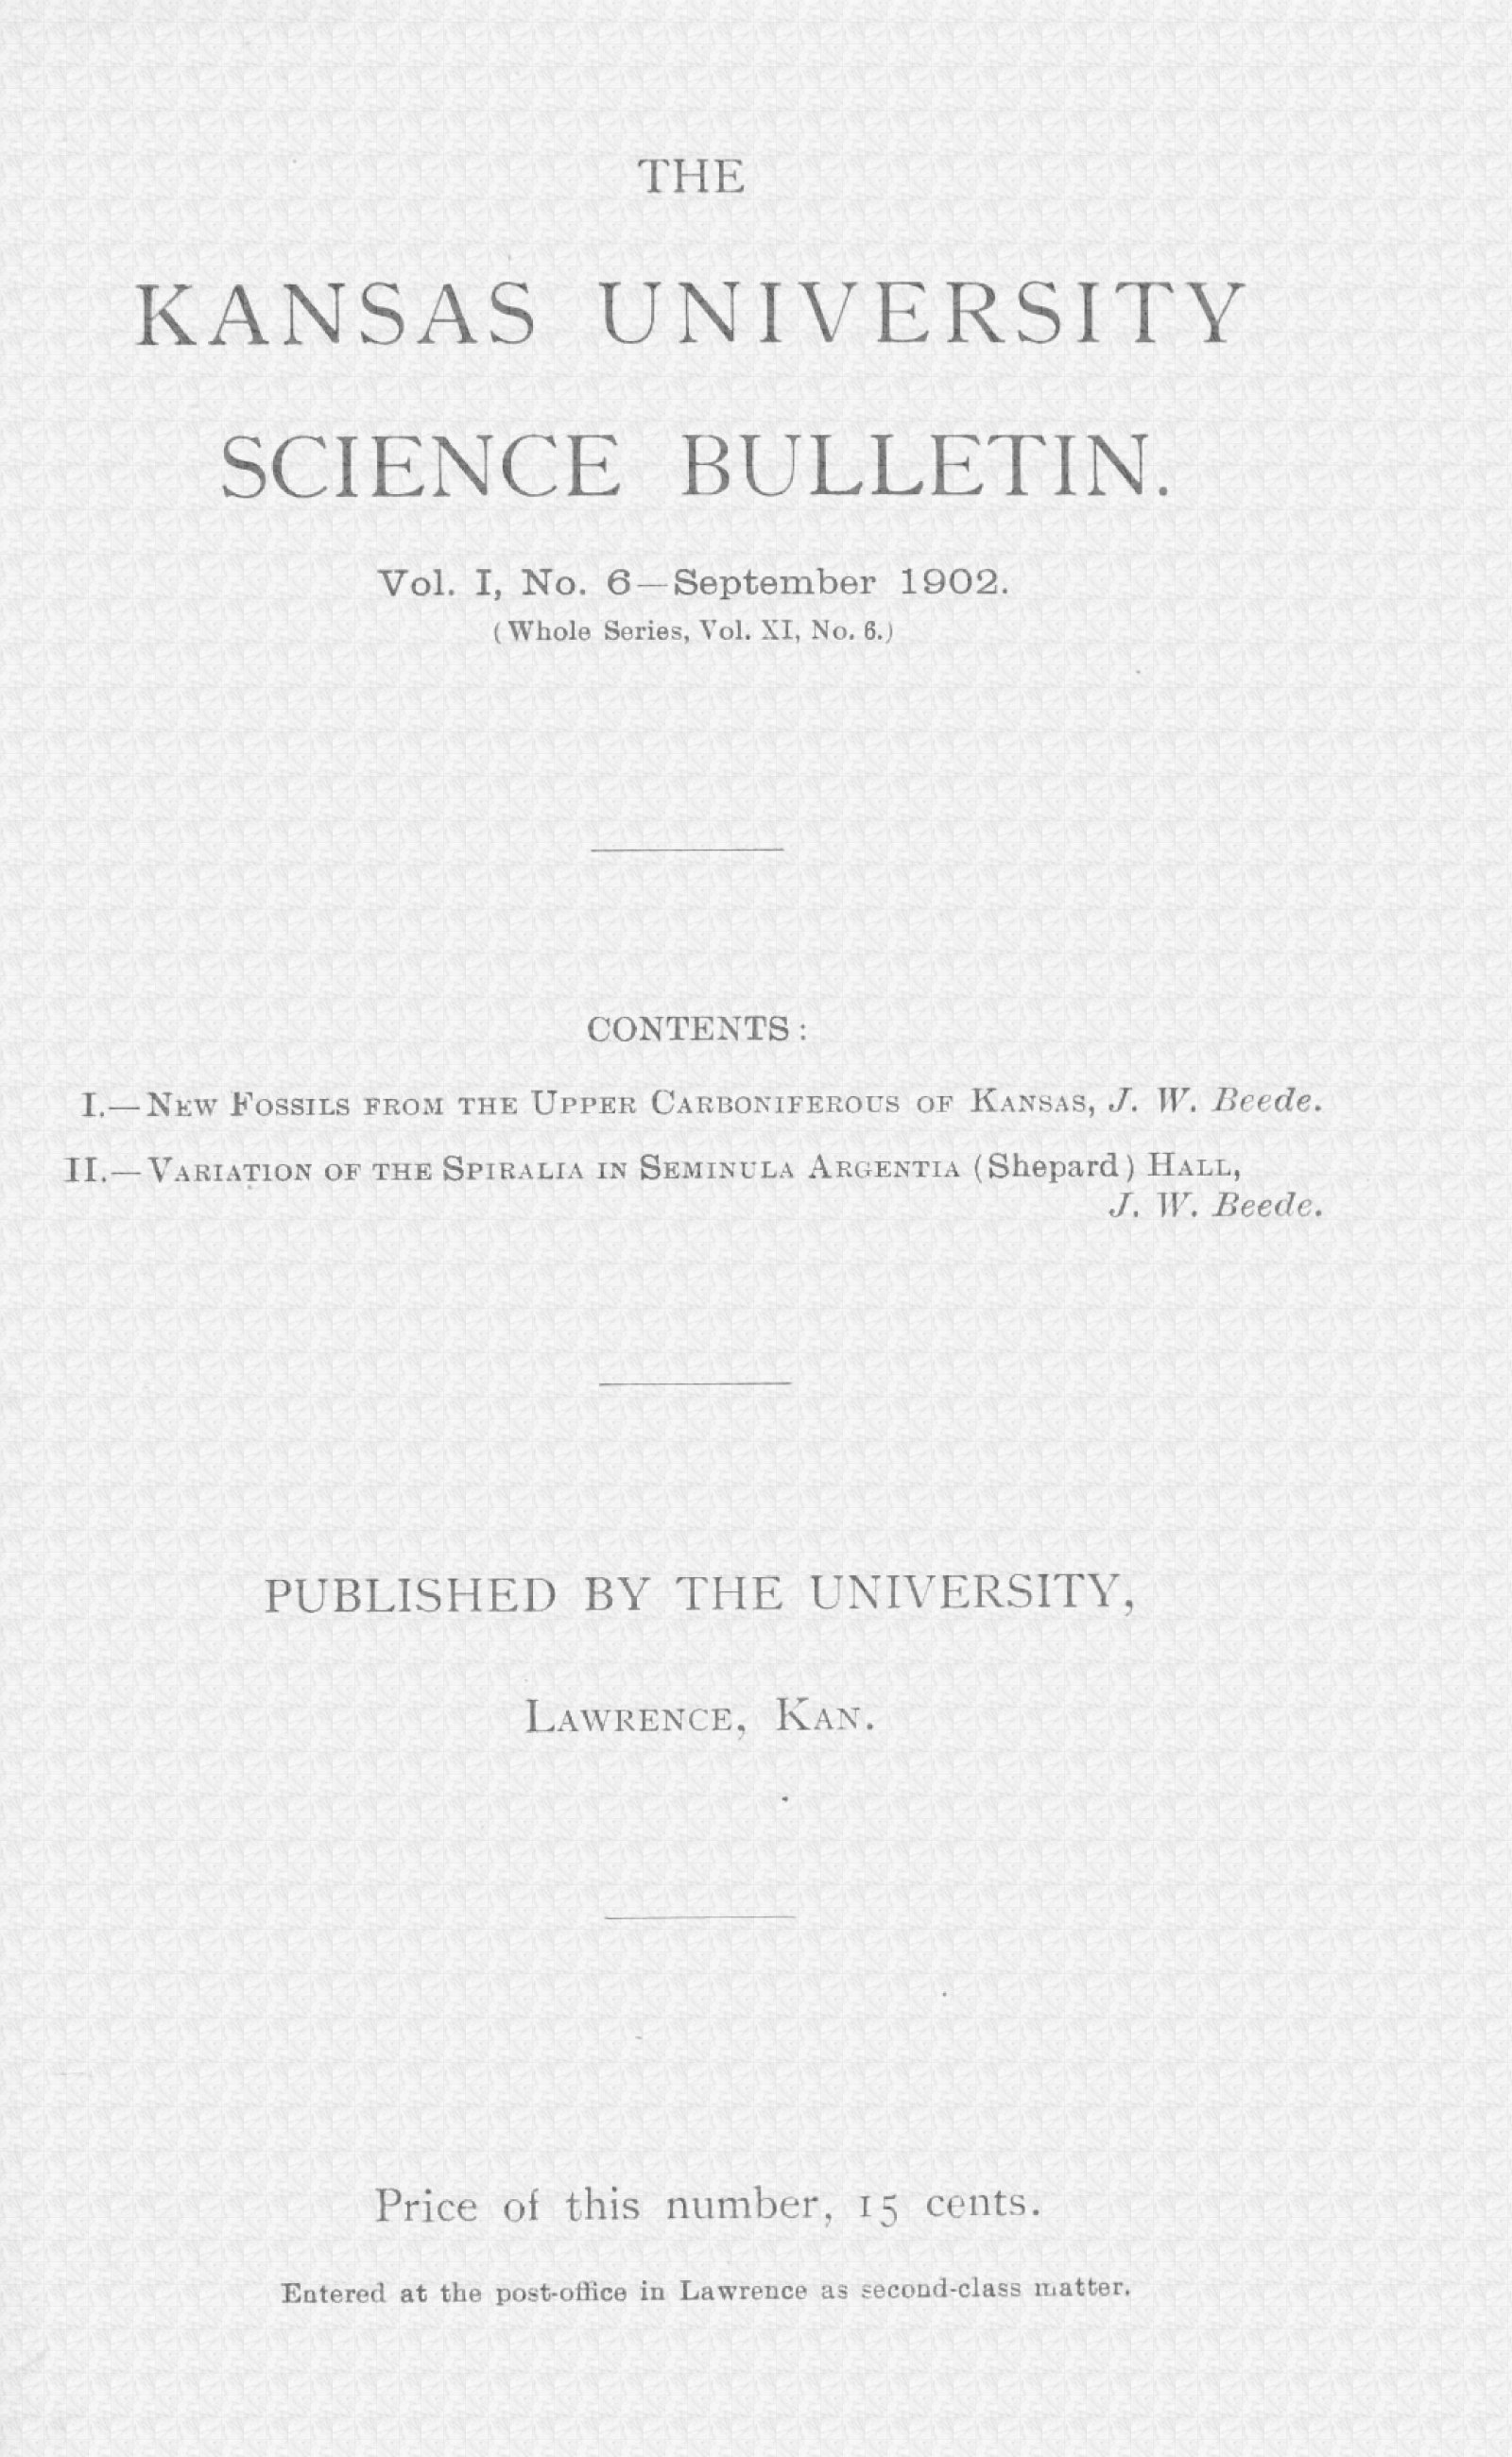 The Kansas University science bulletin, Vol. I, No. 6, September 1902